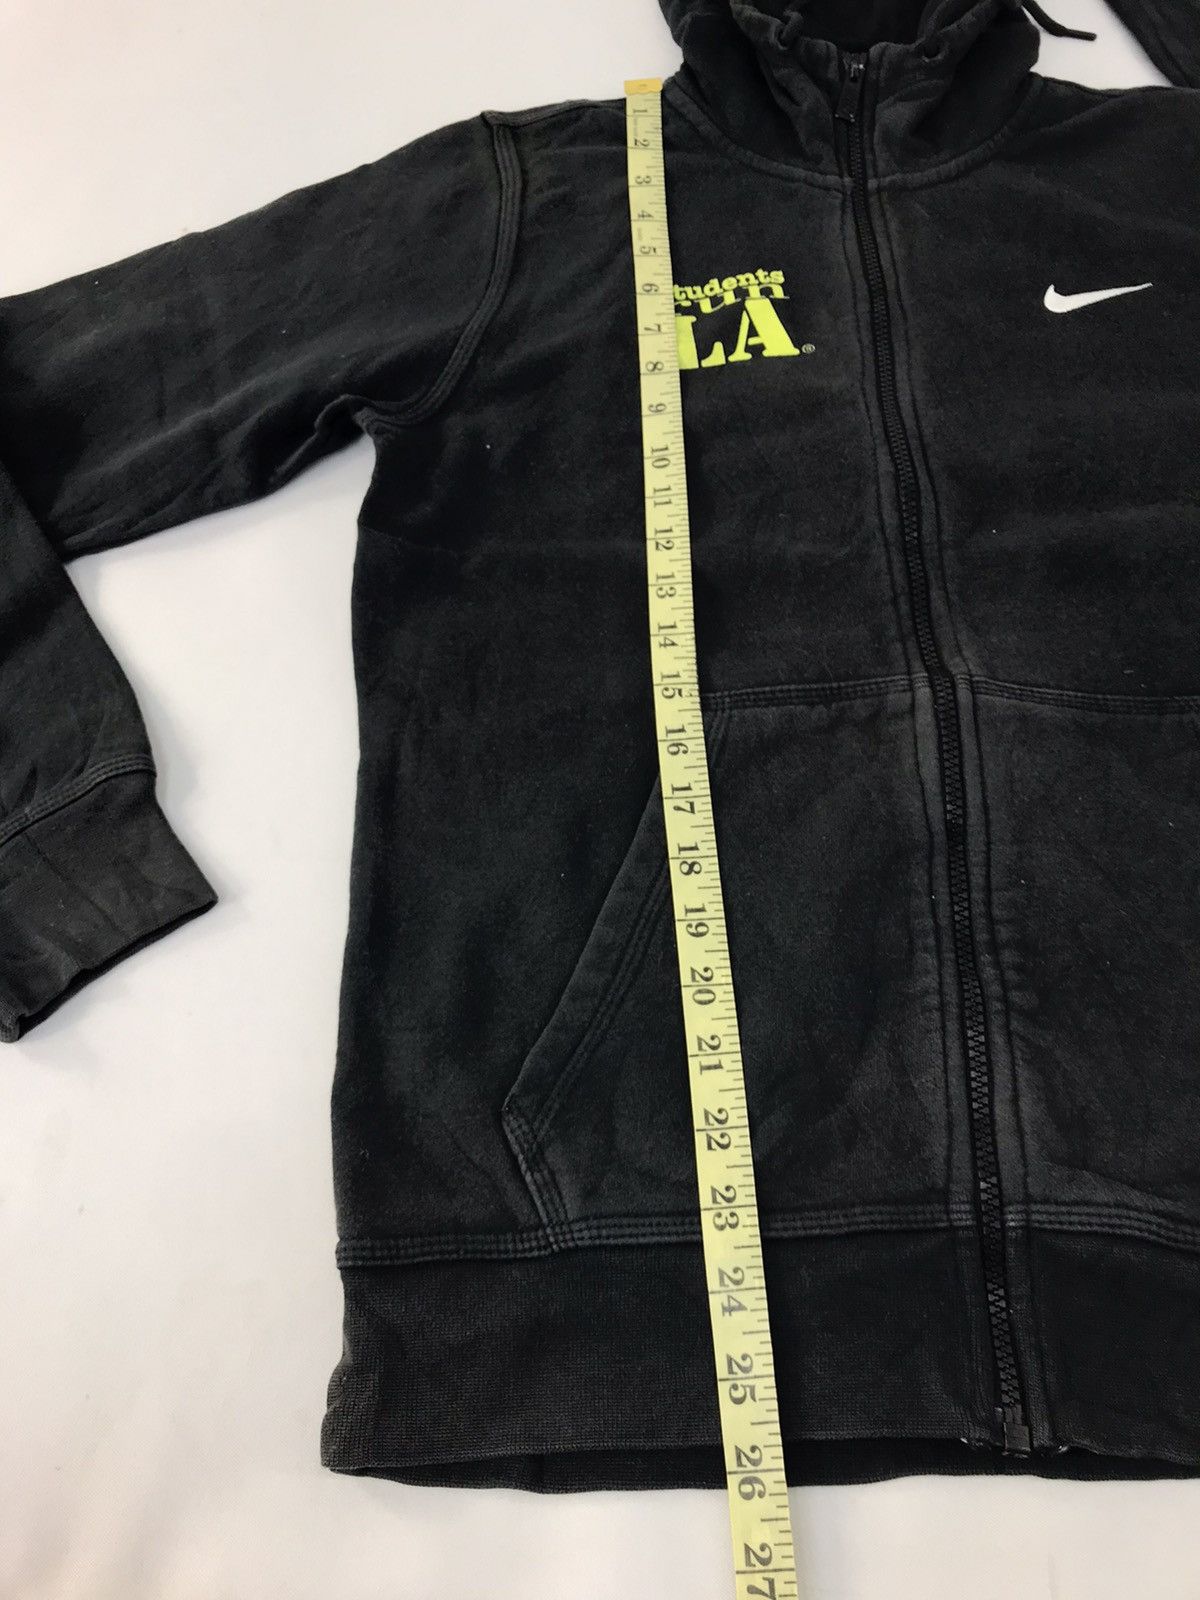 Nike Nike Marathon Finisher Student Run LA Hoodies Jacket Zip Up Size US M / EU 48-50 / 2 - 13 Thumbnail